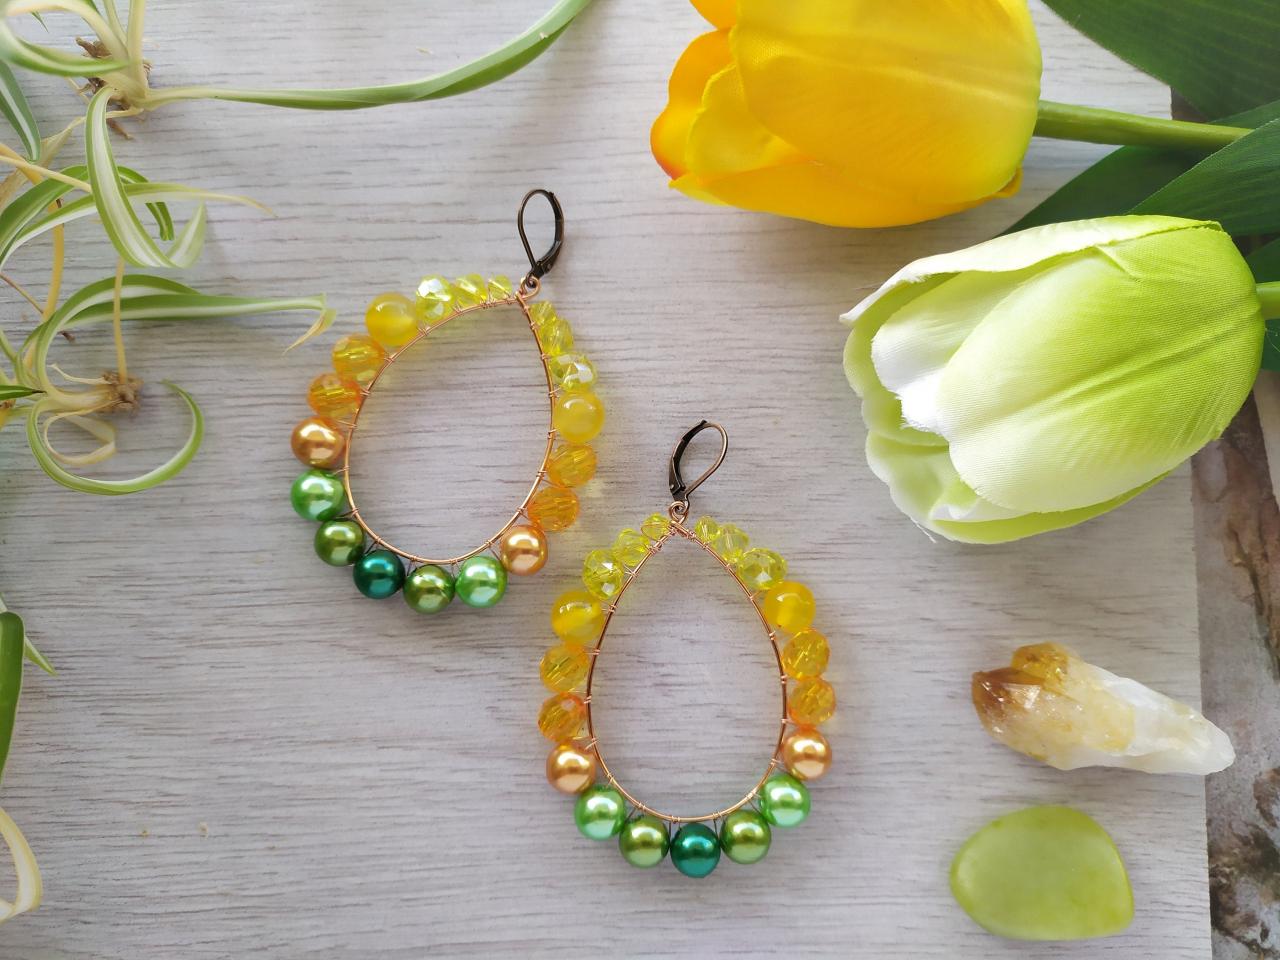 Yellow Green Boho Earrings, Citrus Inspired Earrings, Ombre Beaded Hoops, Bohemian Jewelry, Statement Earrings, Summer Vibes,floral Inspired